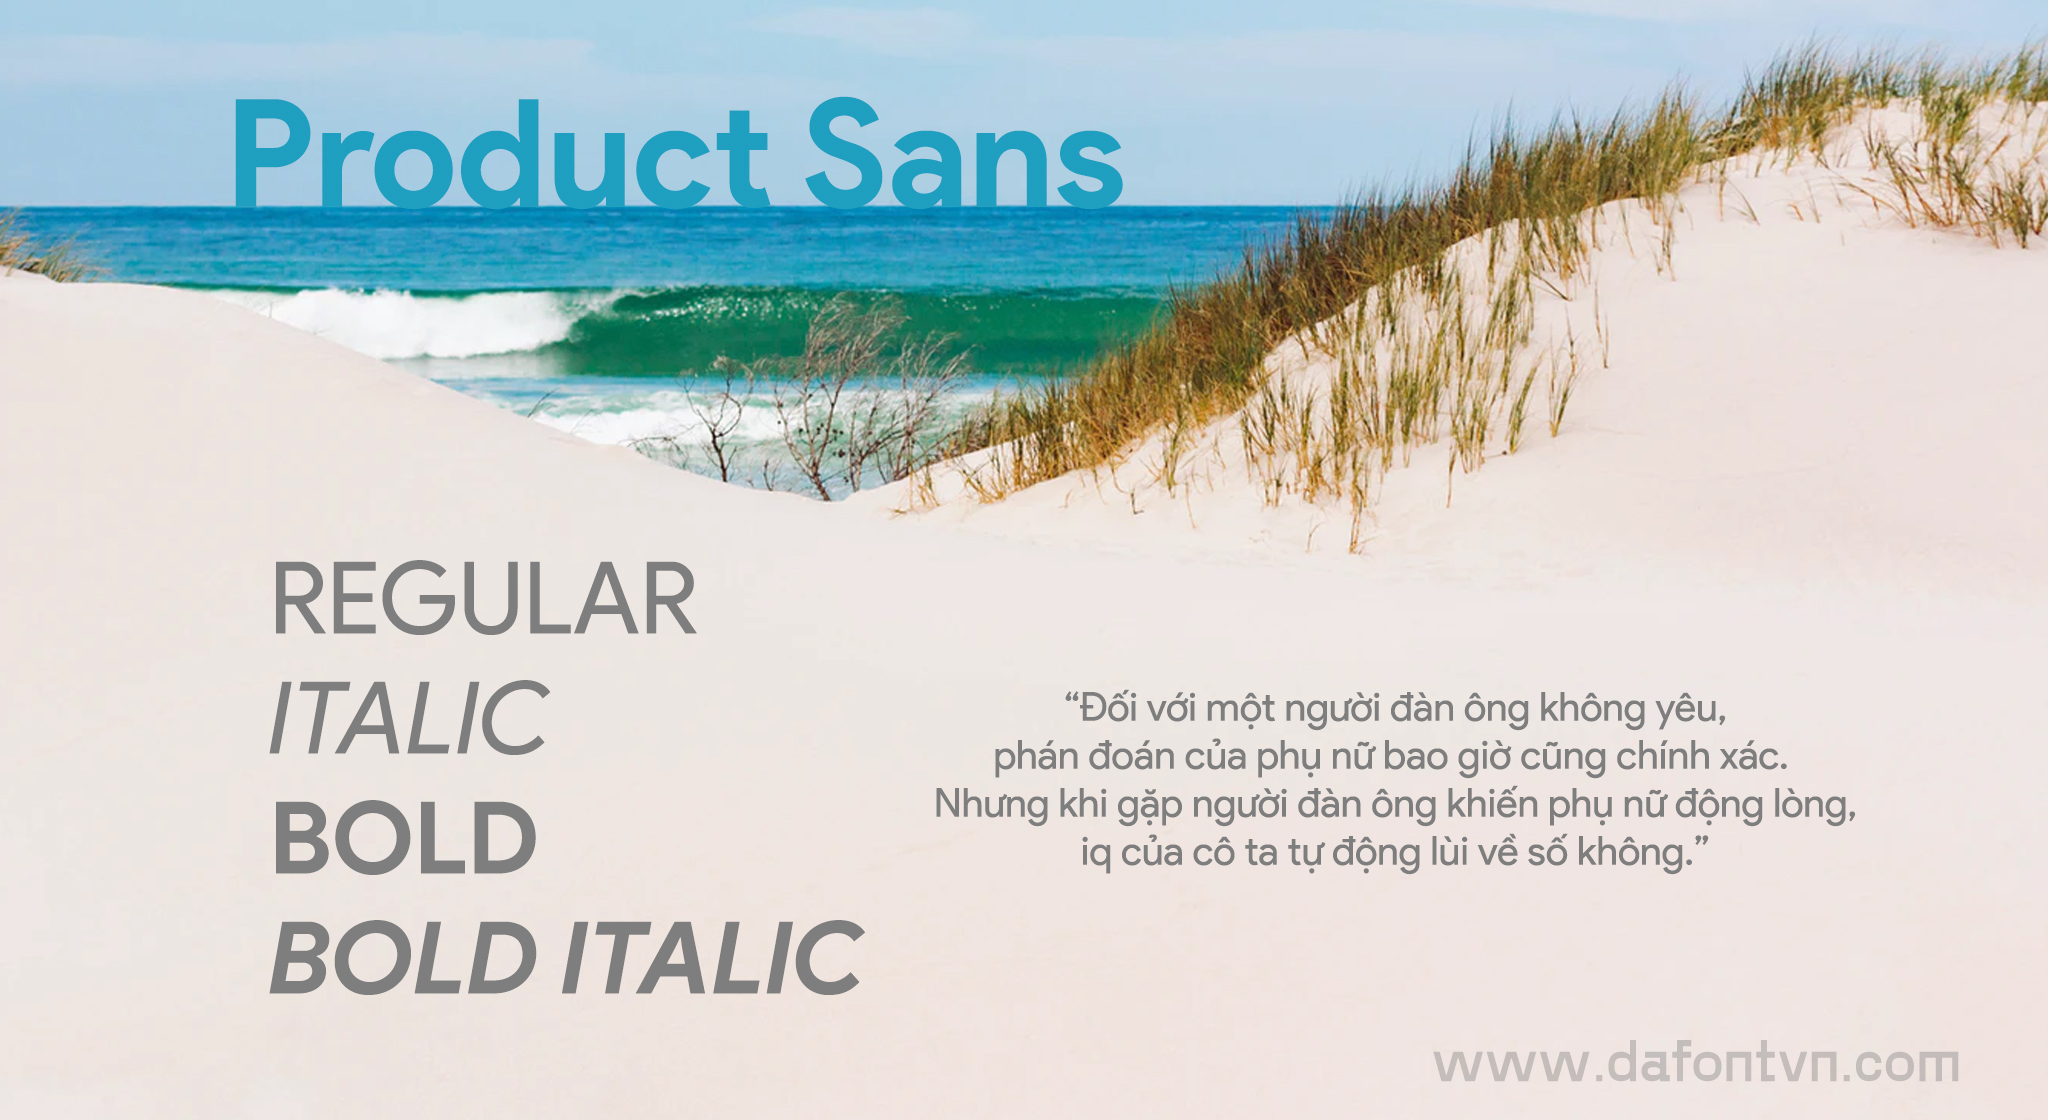 Tải font Product Sans Việt Hóa miễn phí